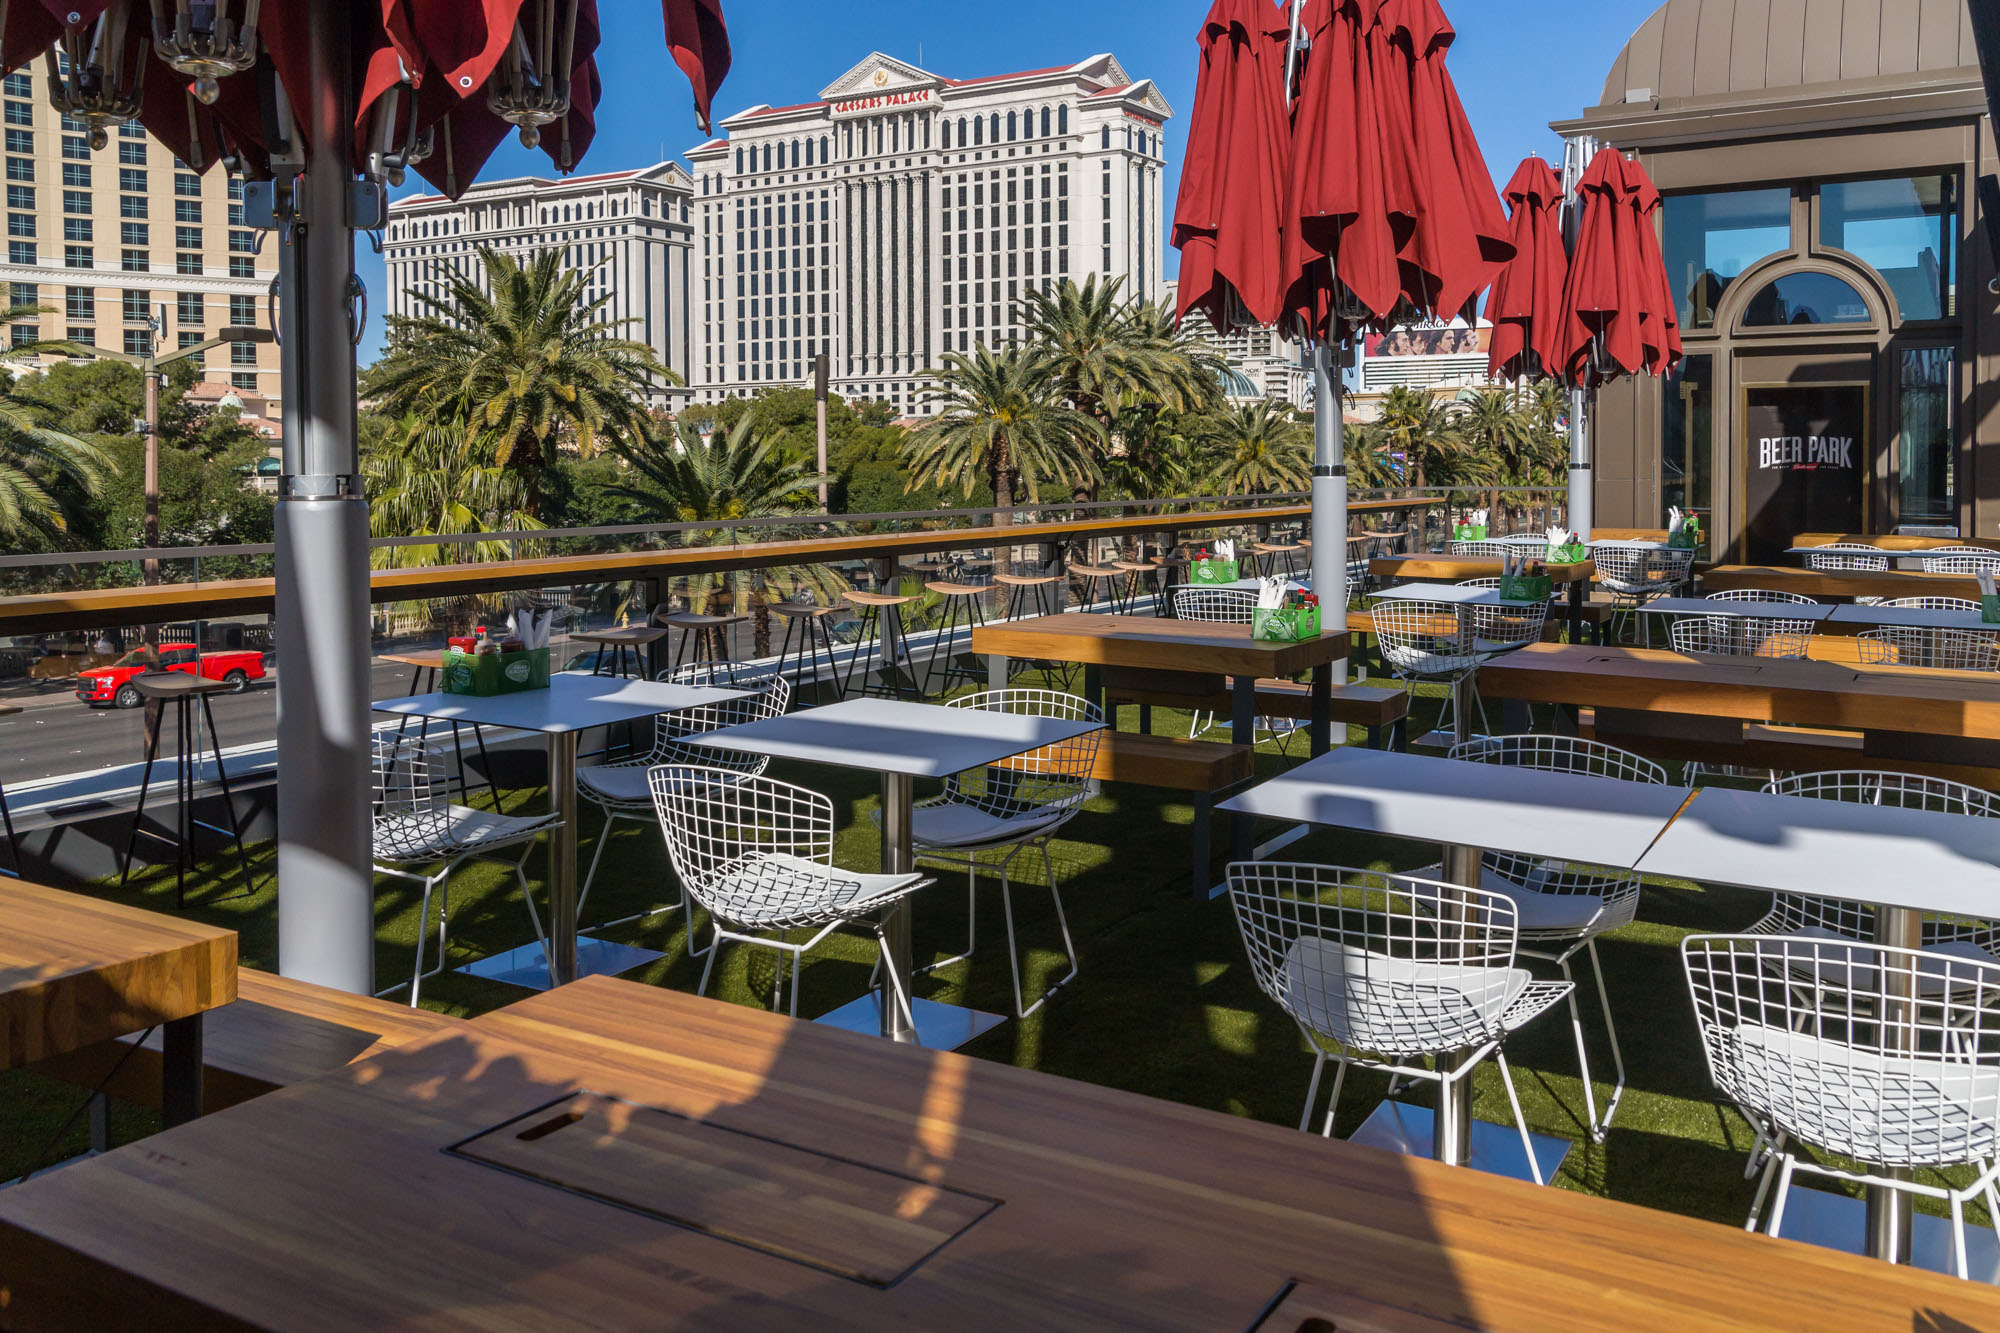 An outdoor bar overlooking the Las Vegas Strip.